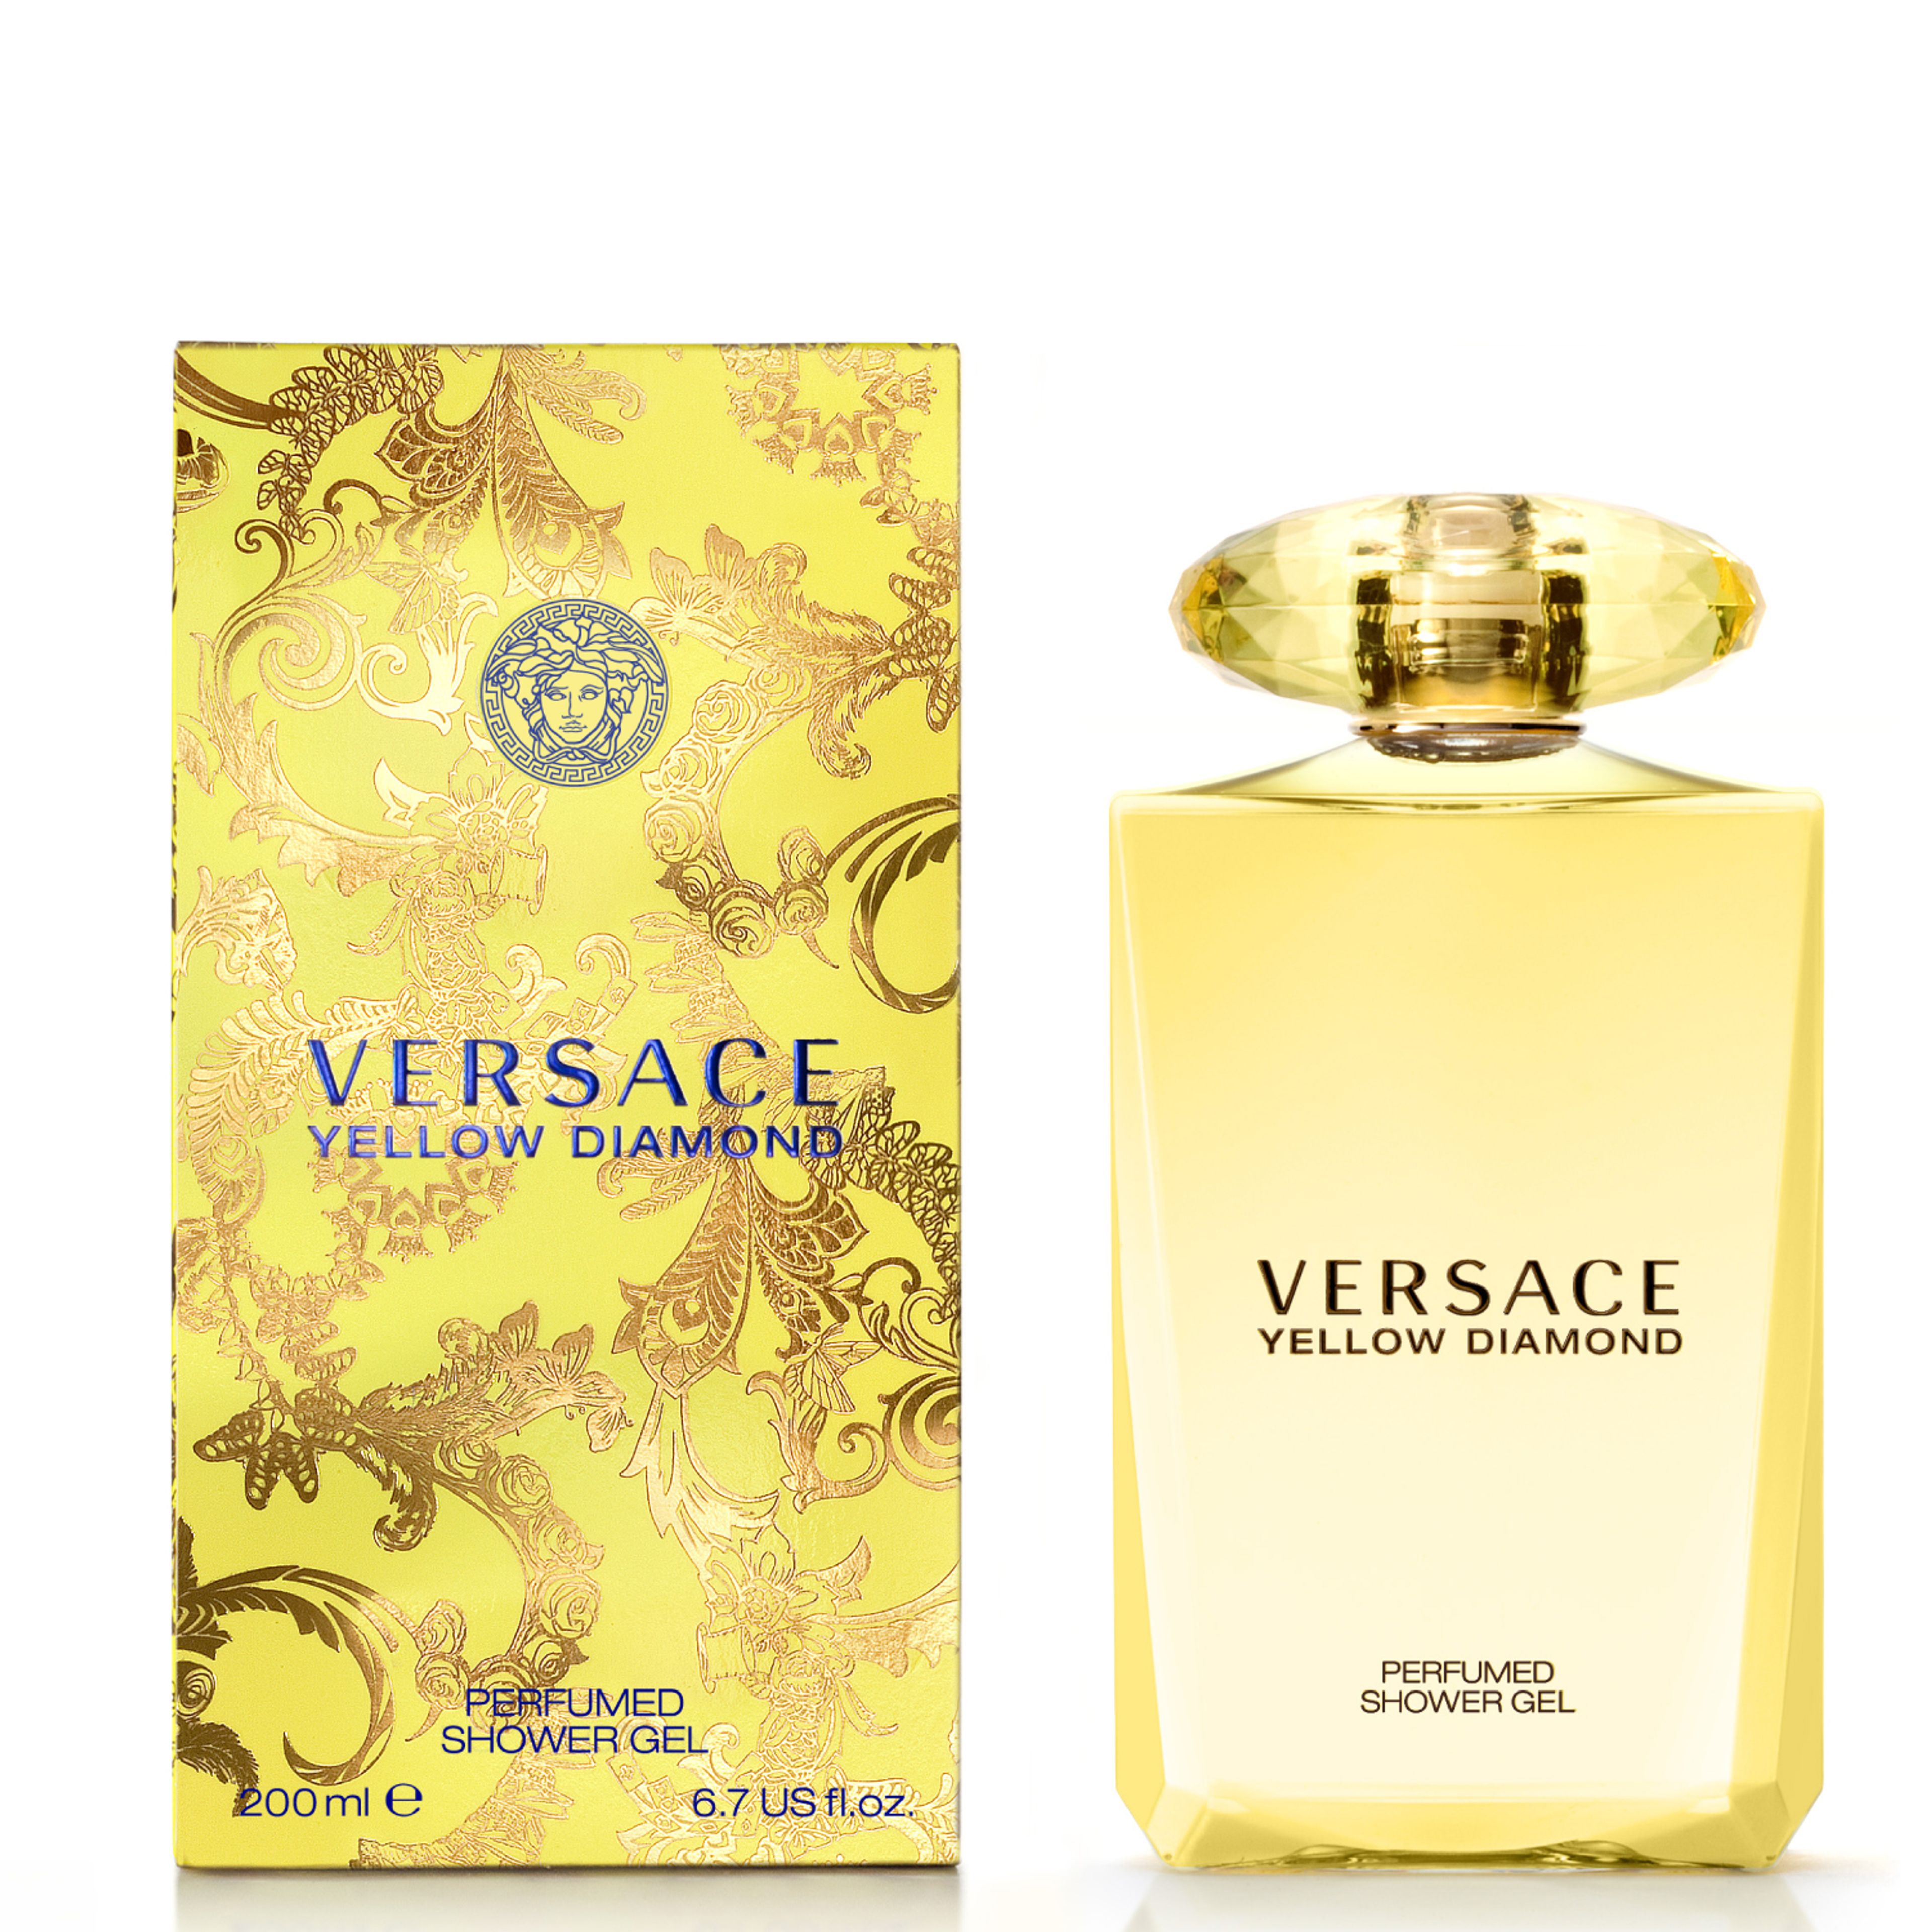 Versace Yellow Diamond Perfumed Shower Gel 1